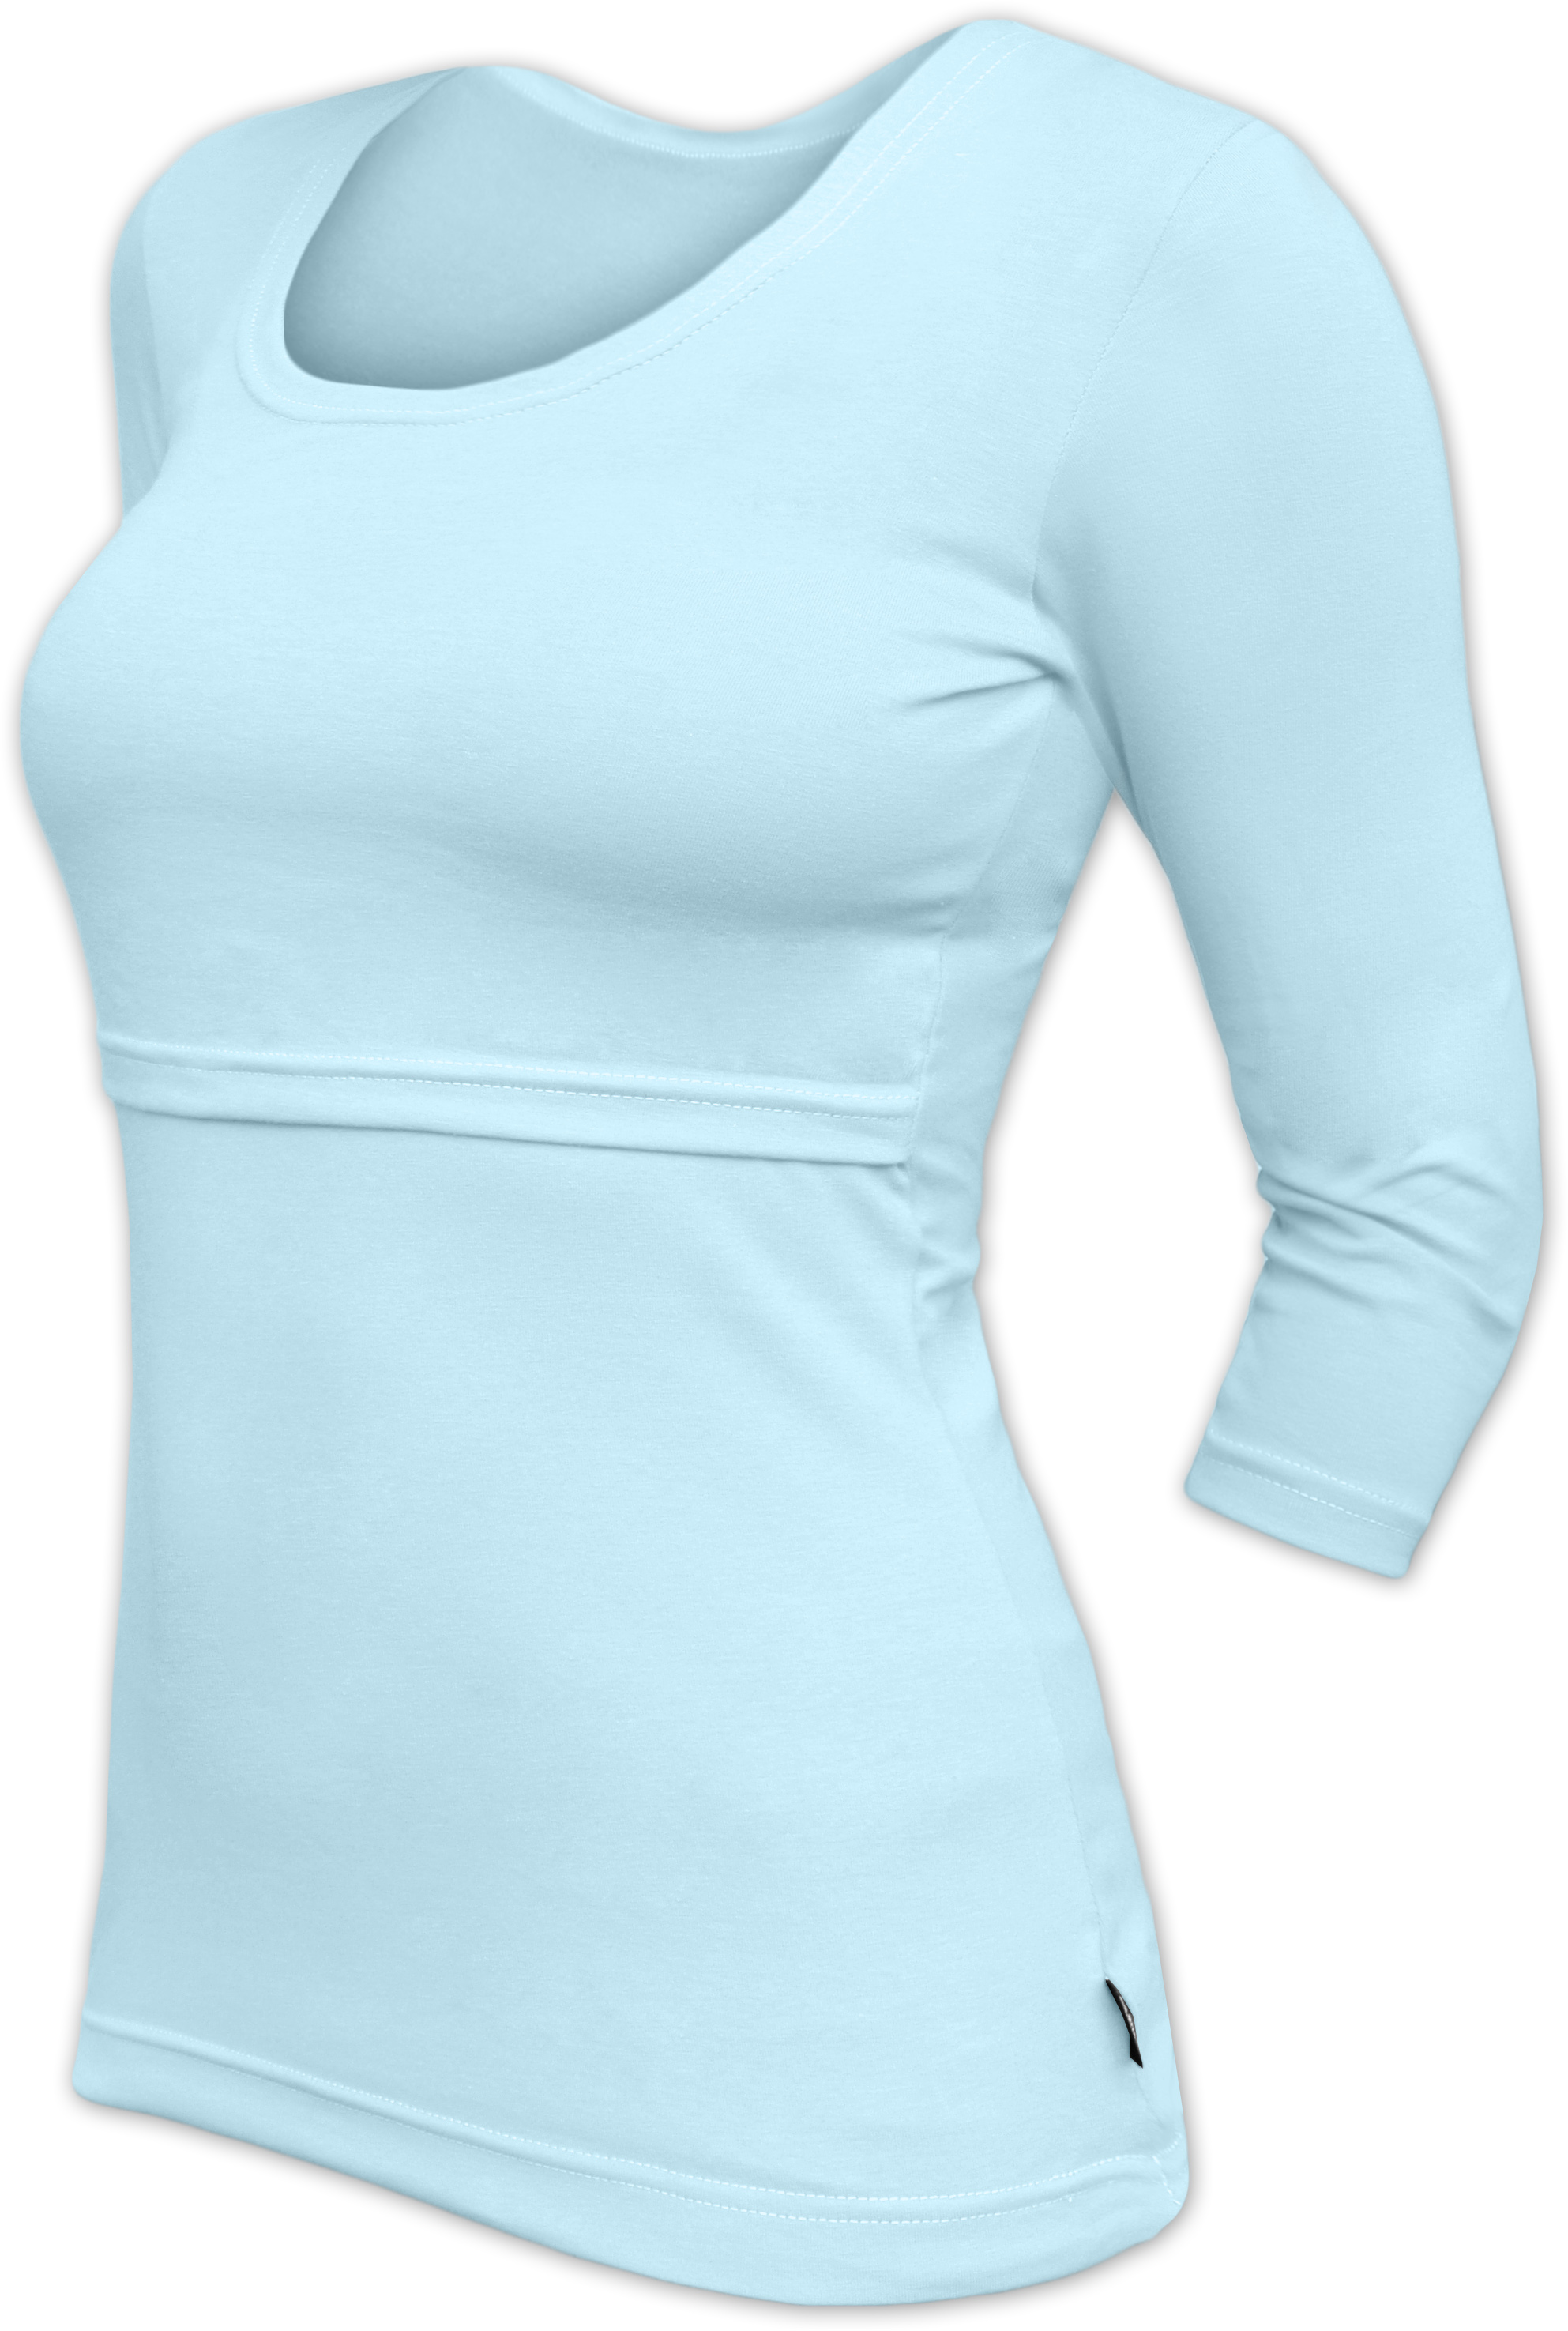 KATERINA- breast-feeding T-shirt 01, 3/4 sleeves, LIGHT BLUE S/M